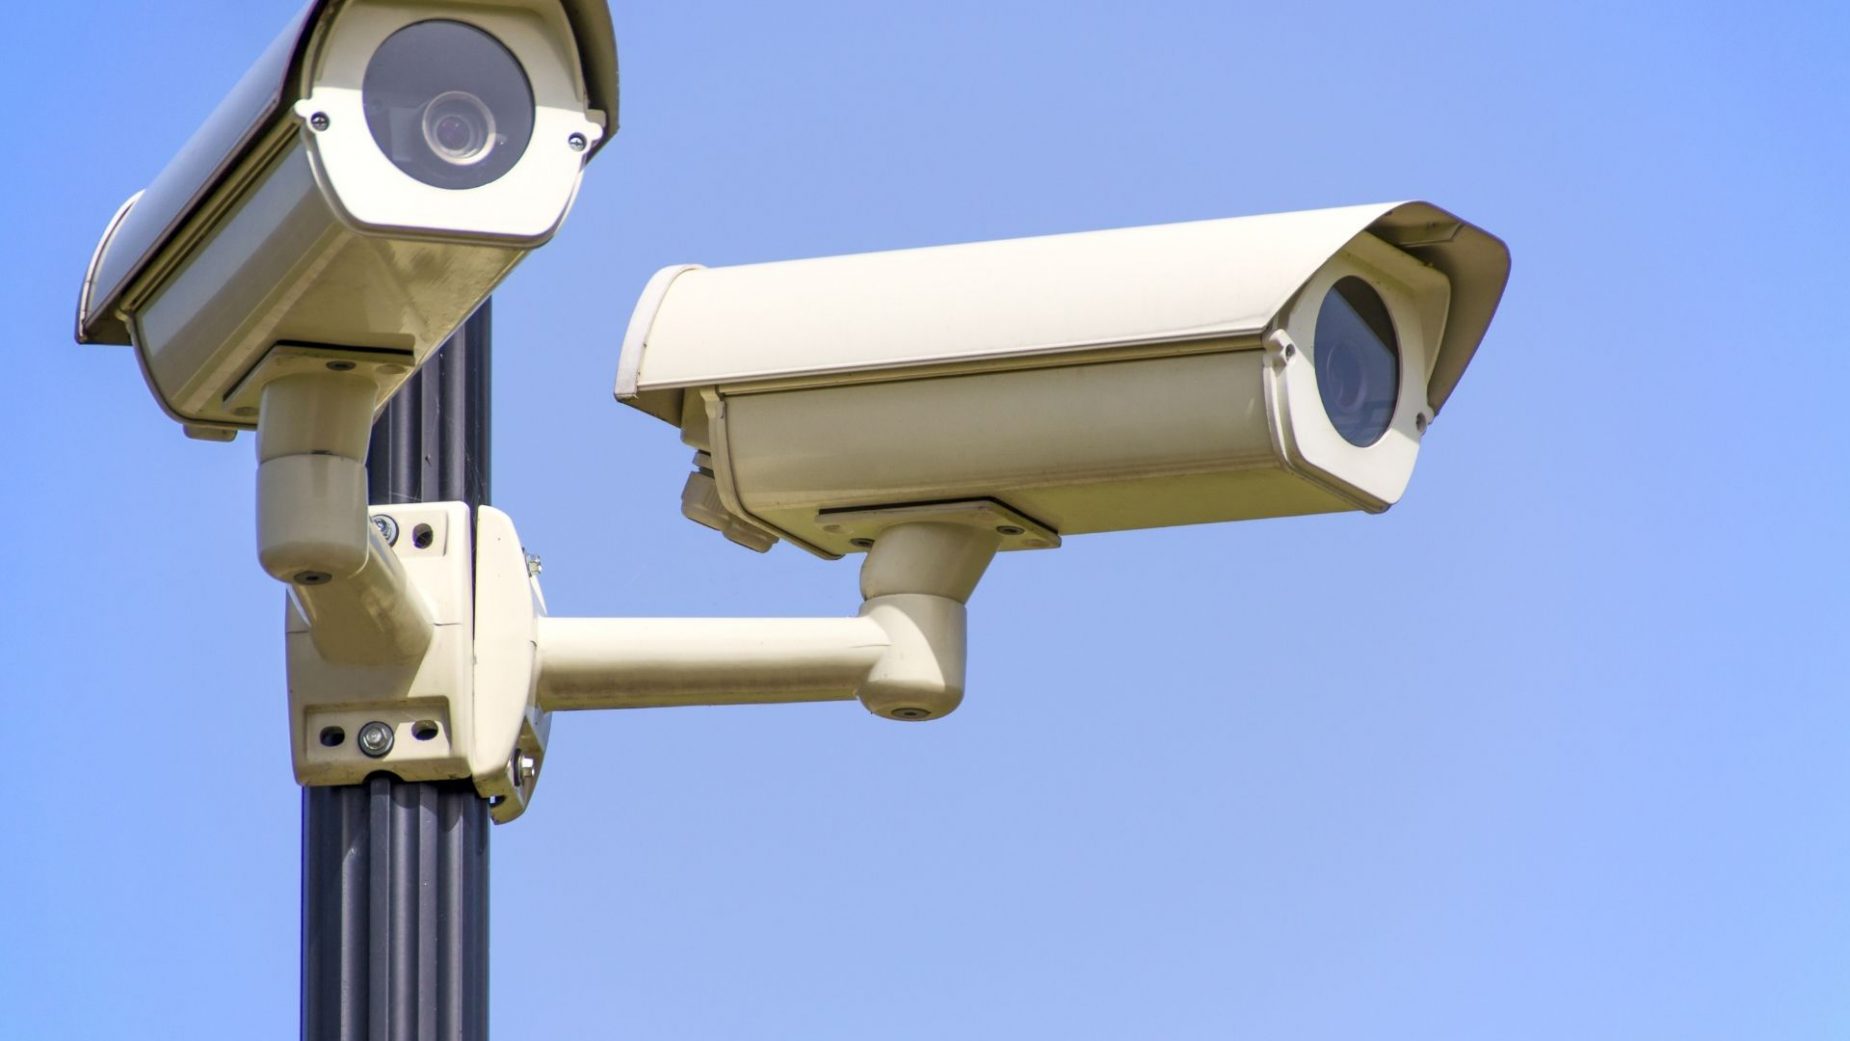 Video Surveillance As A Service (VSaaS) Market